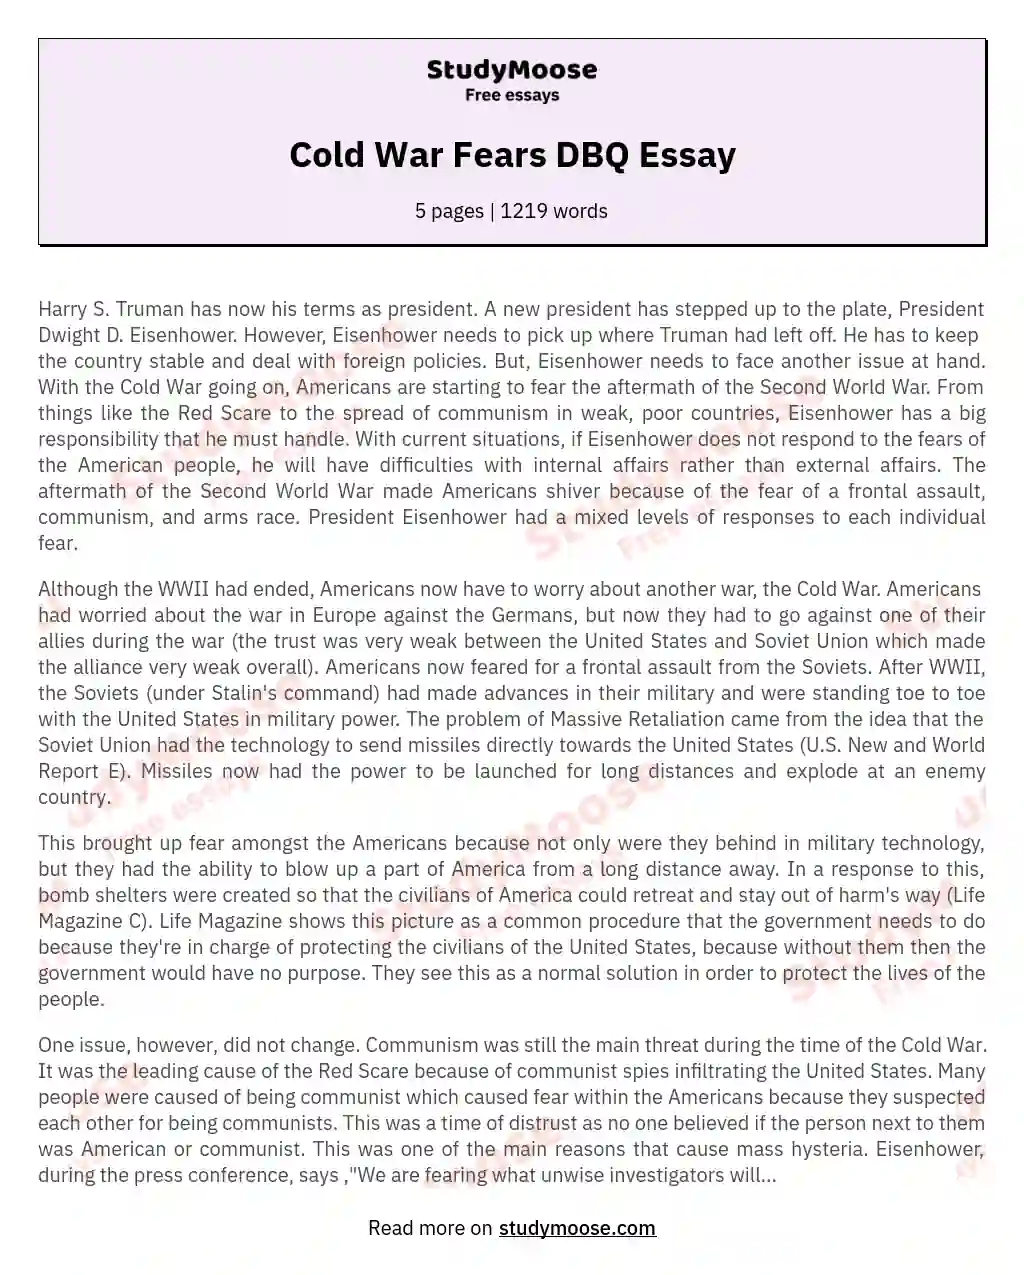 dbq essay example